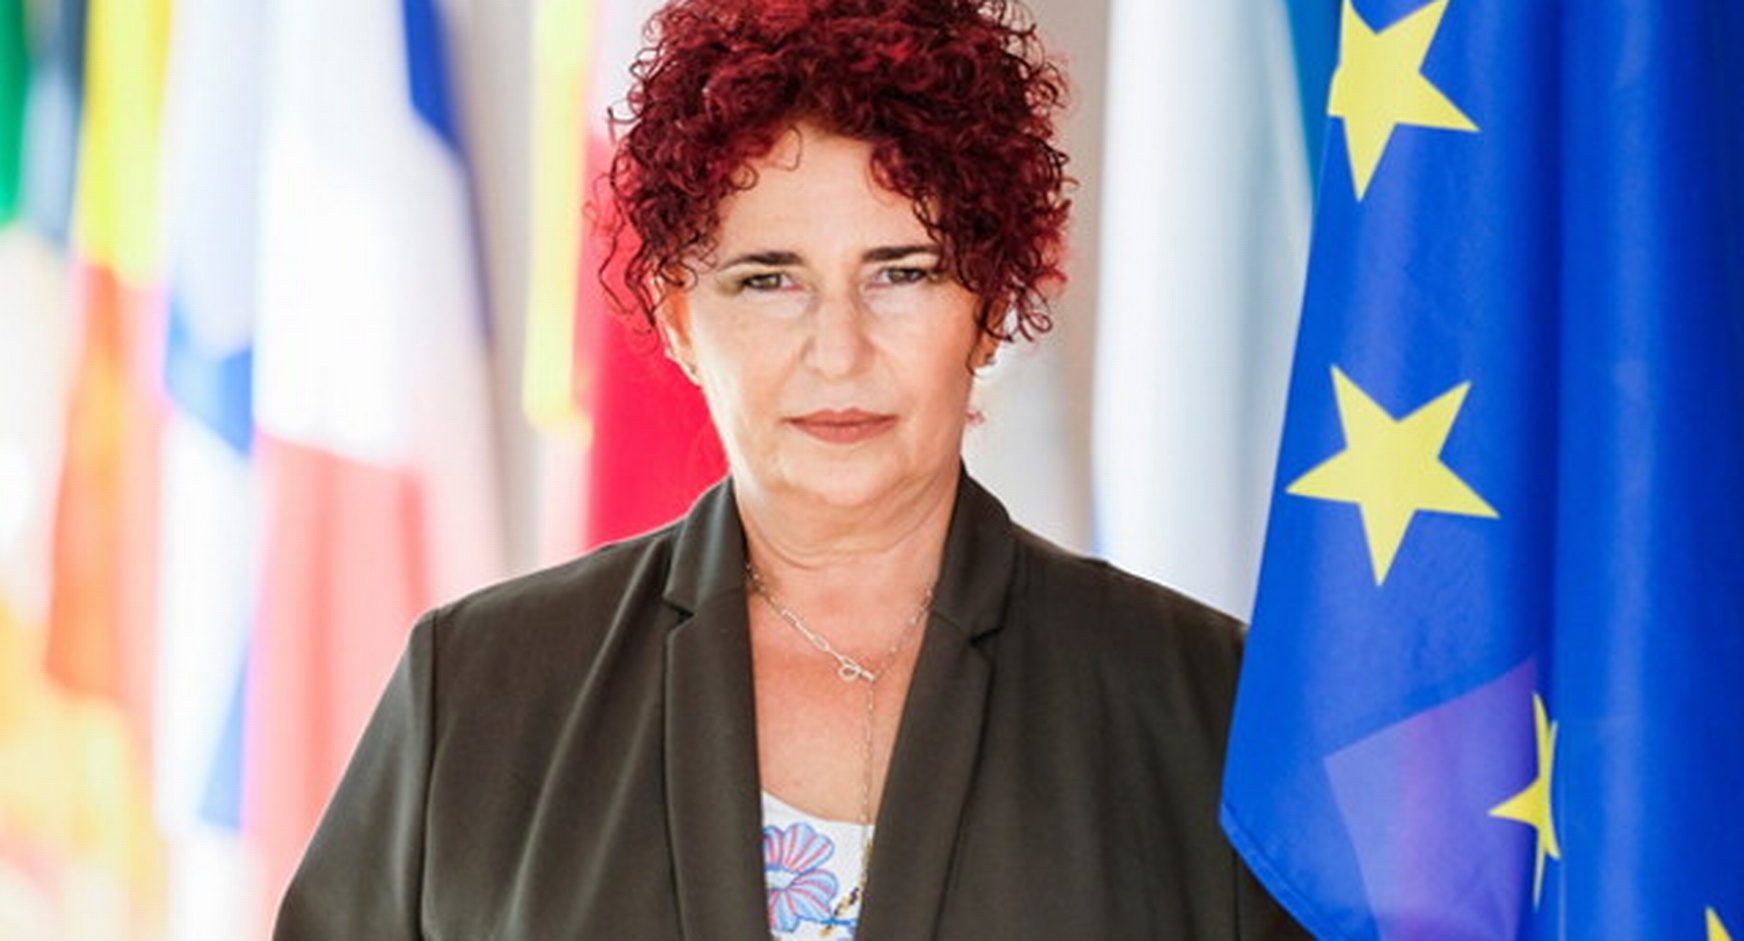 Christa Schweng, frühere EWSA Präsidentin